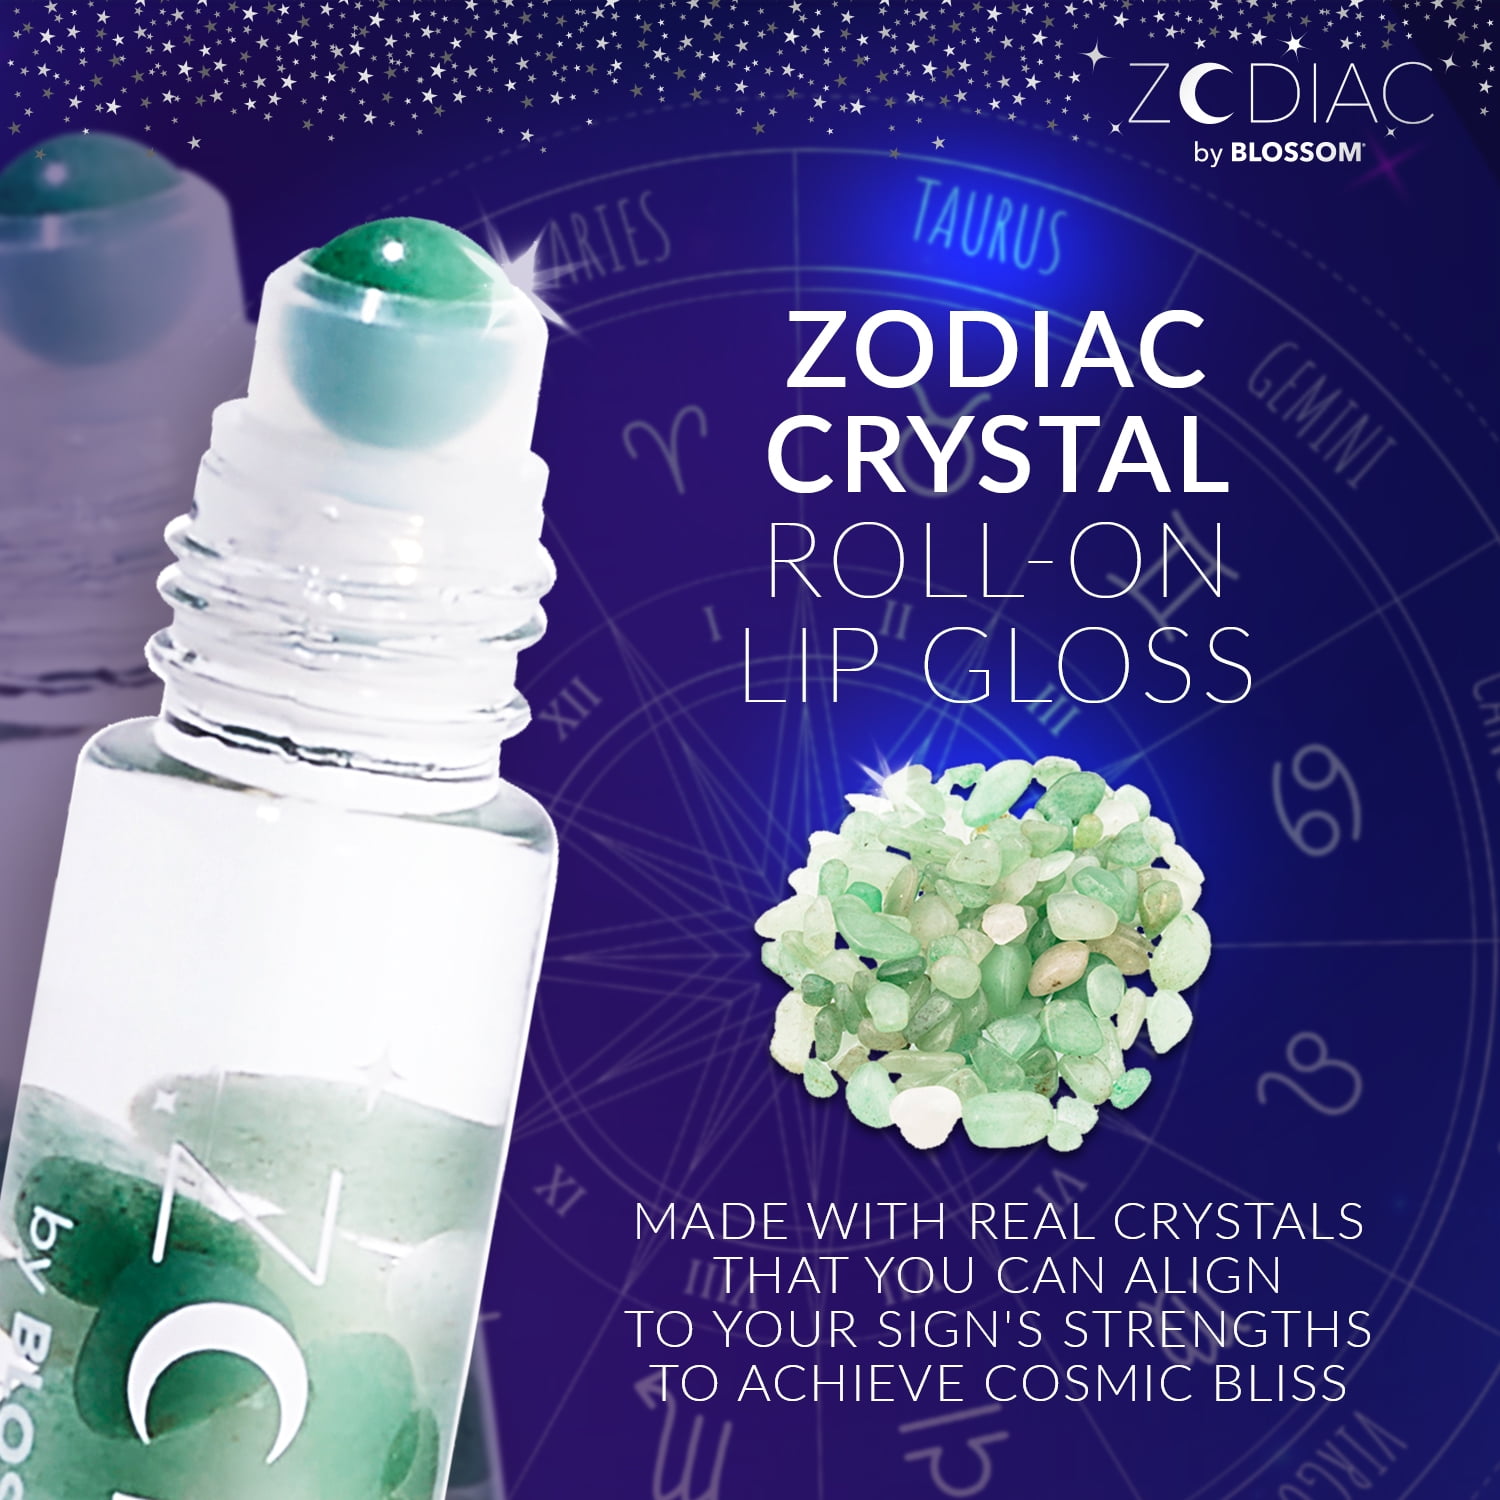 Buzio water bottle lucky color according to zodiac sign#zodiacsign #lu